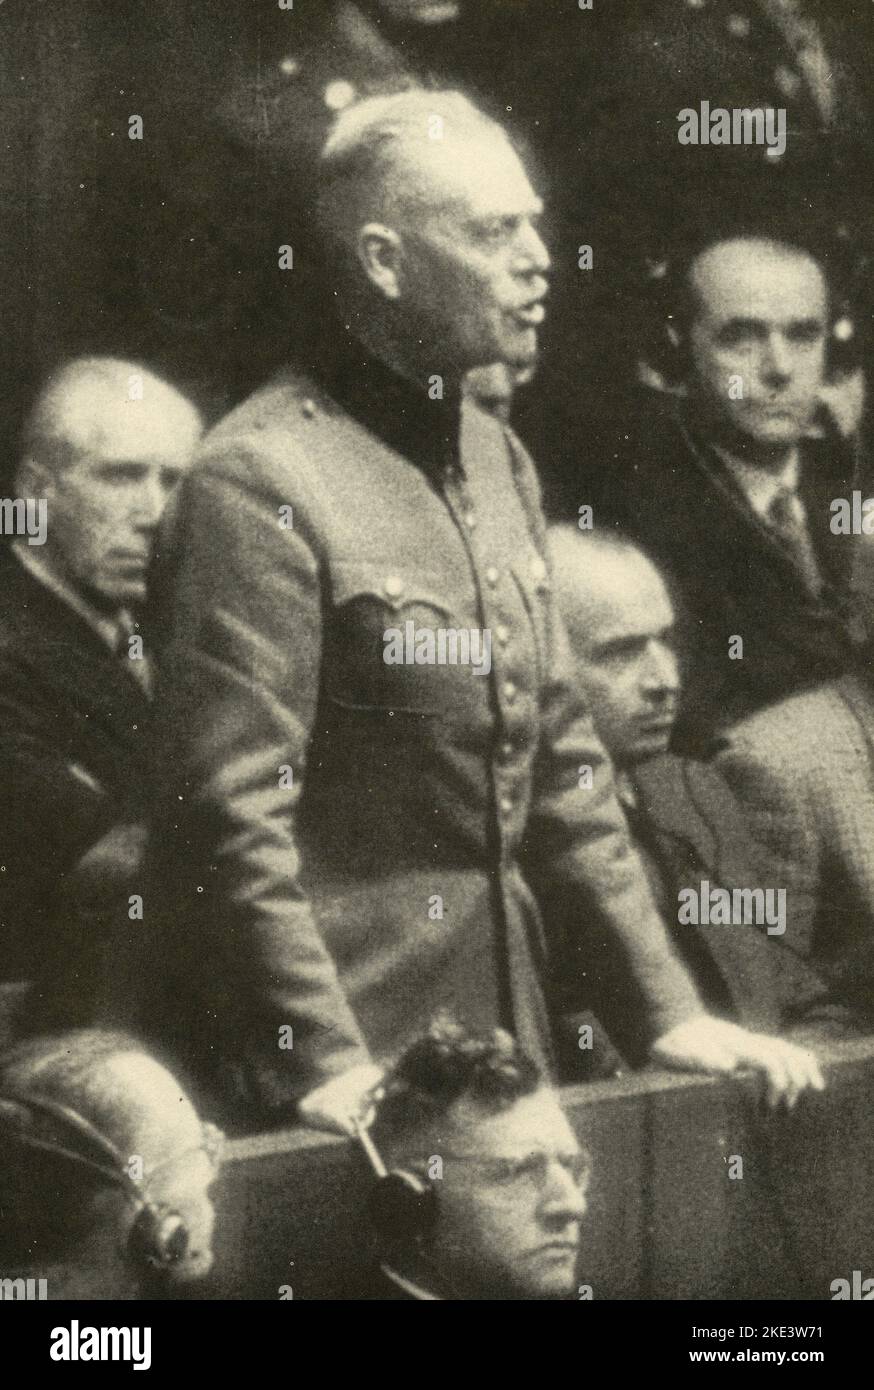 German general, field marshall, and war criminal Wilhelm Keitel during the Nuremberg trial, Germany 1945 Stock Photo